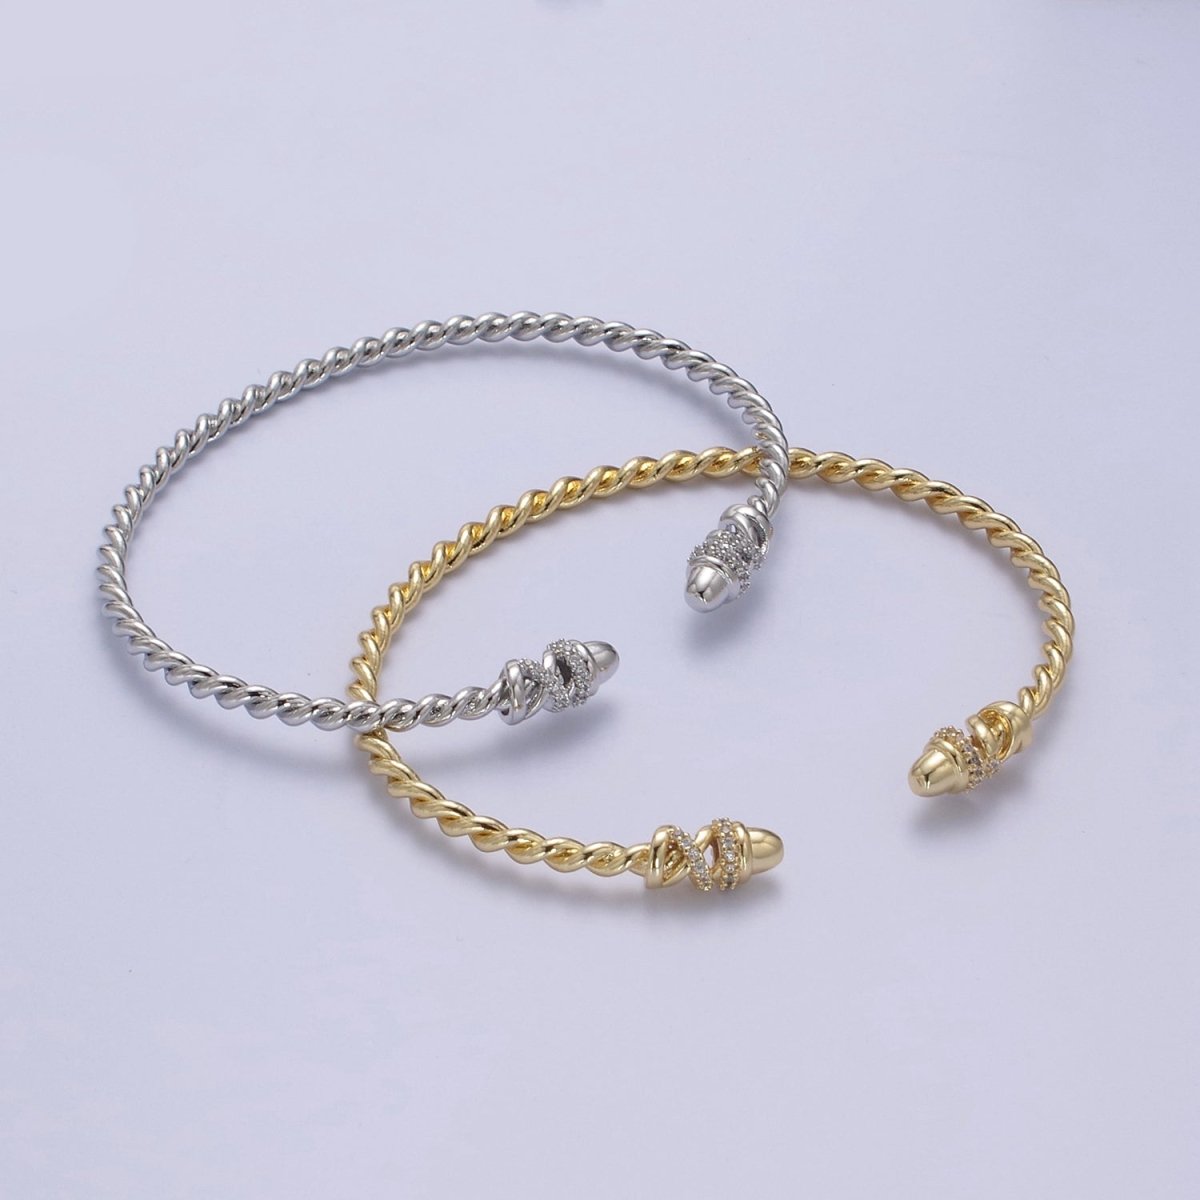 Adjustable Gold Twisted Rope Bracelet Dainty Silver Cuff Bangle, Braided Bracelet, Stacking Bracelet | WA-694 WA-695 Clearance Pricing - DLUXCA